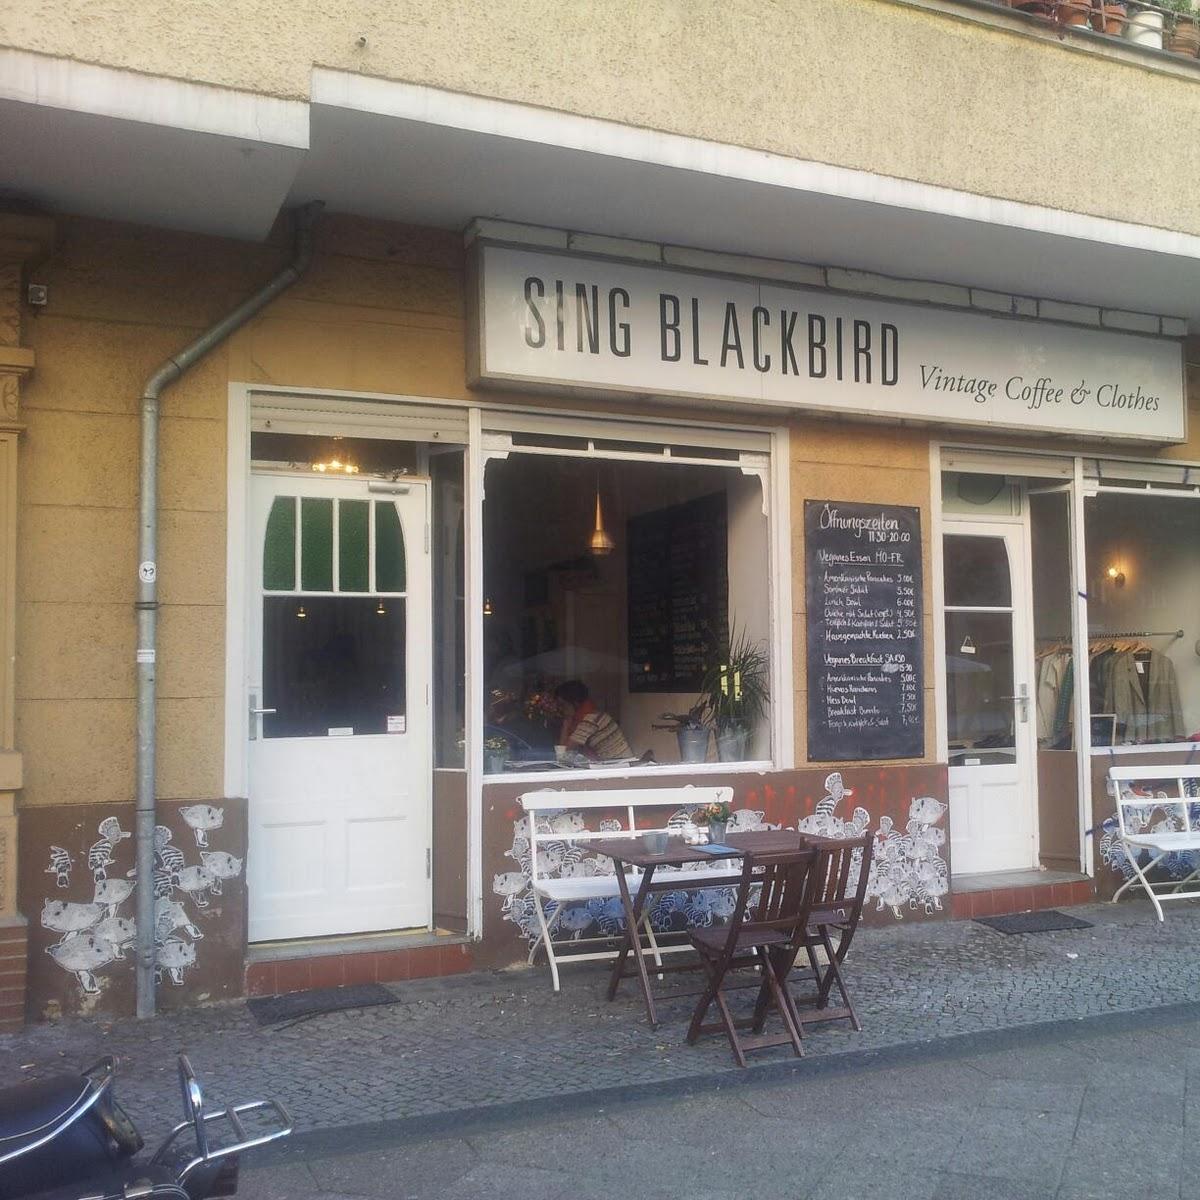 Restaurant "Sing Blackbird Vintage" in Berlin